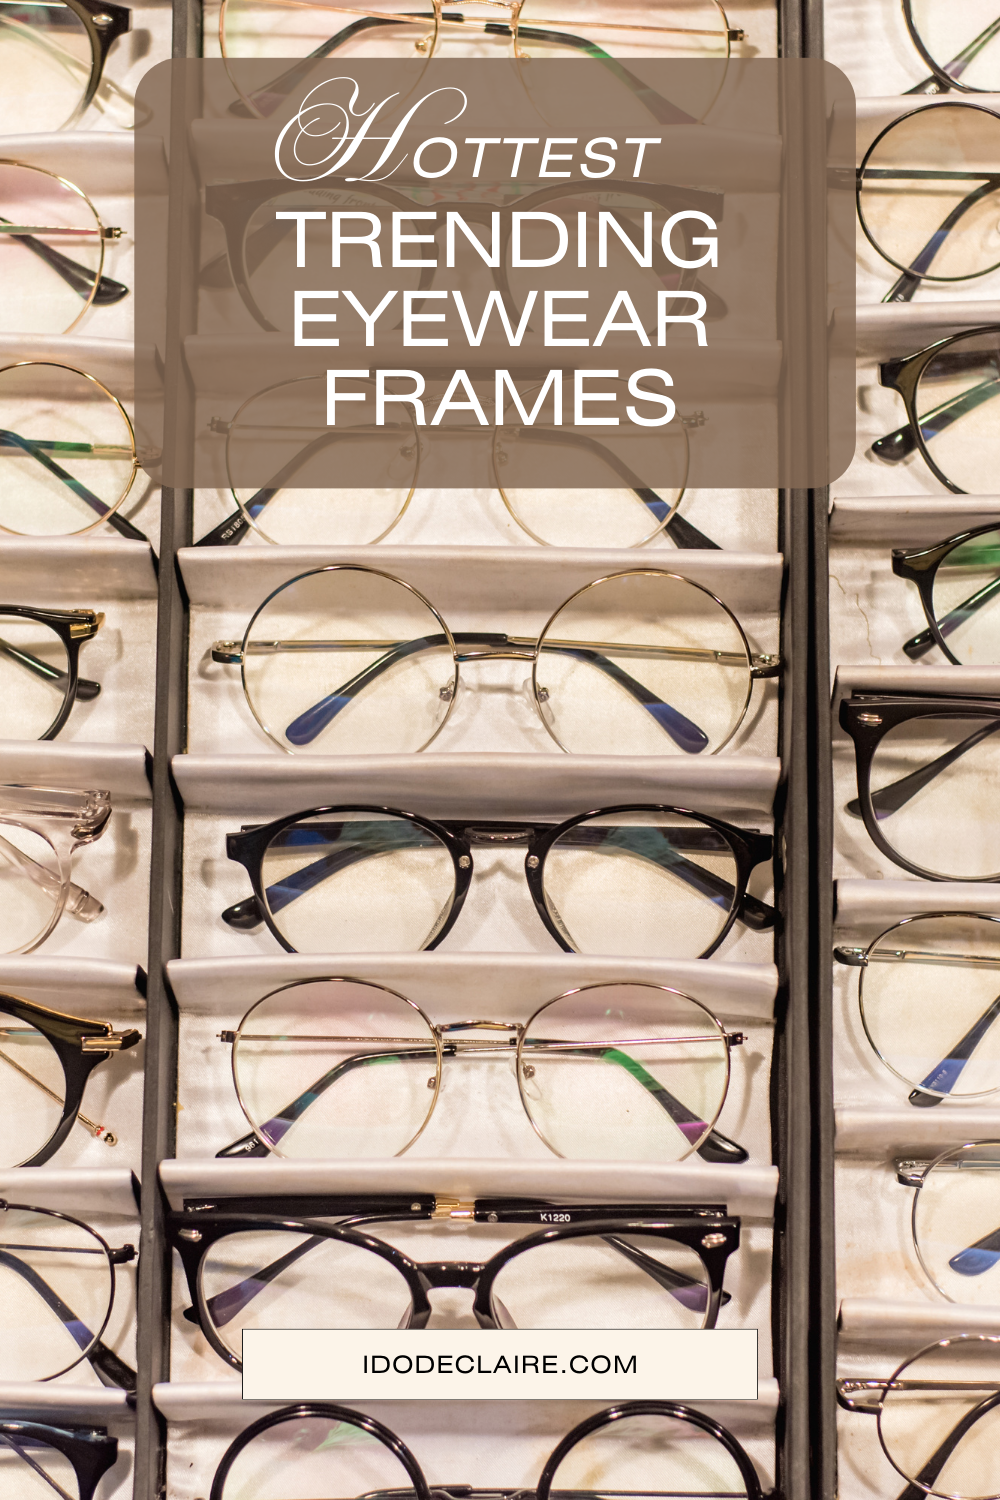 The Hottest Trending Eyewear Frames